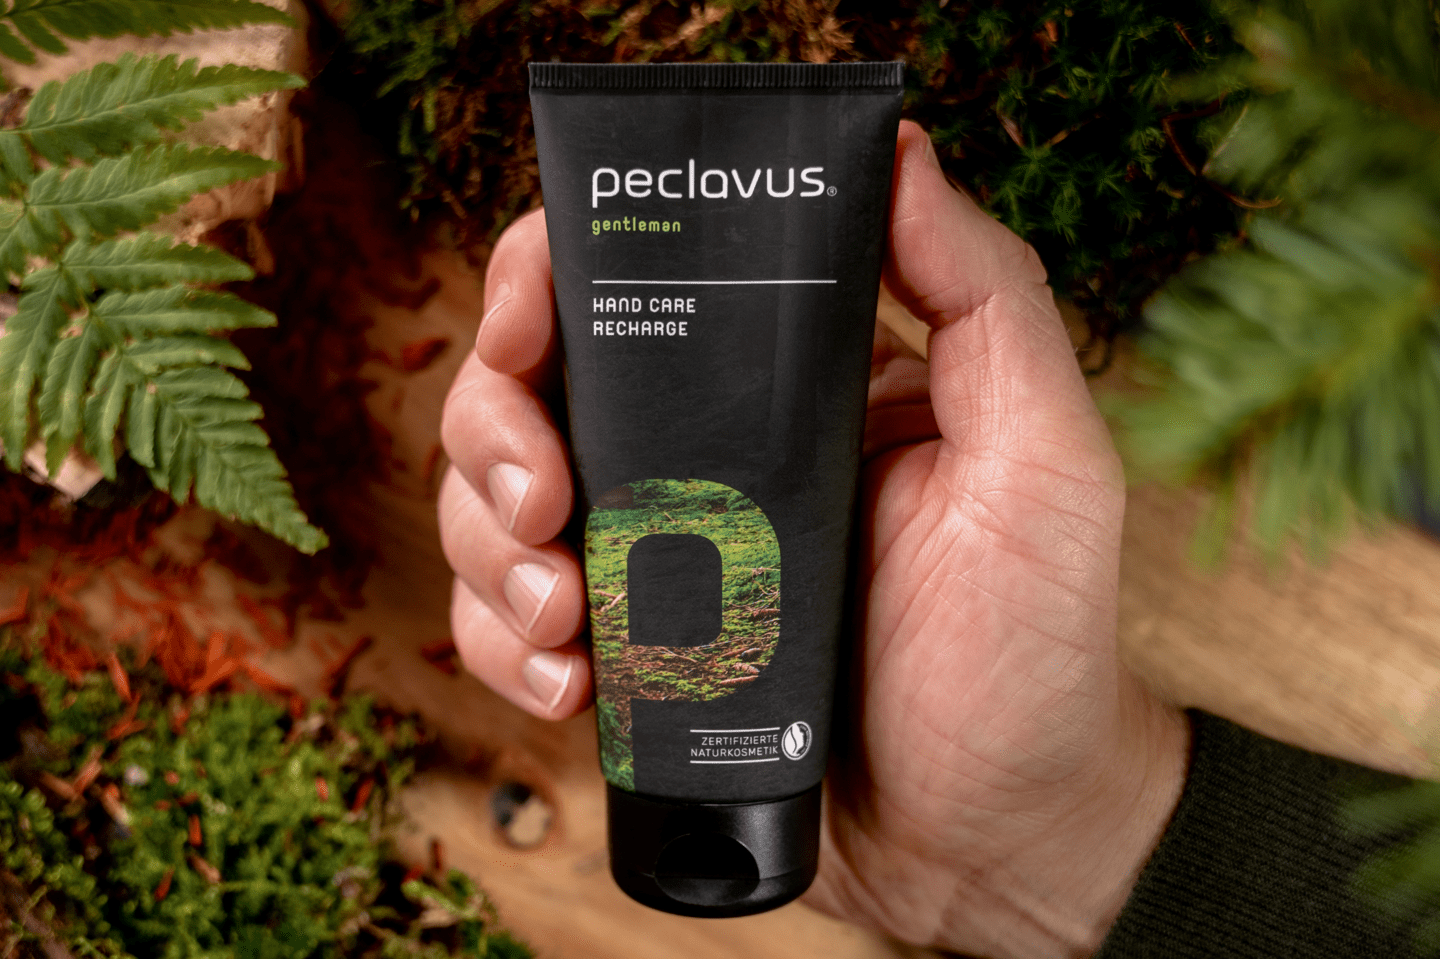 peclavus - Hand Care Recharge, 100 ml